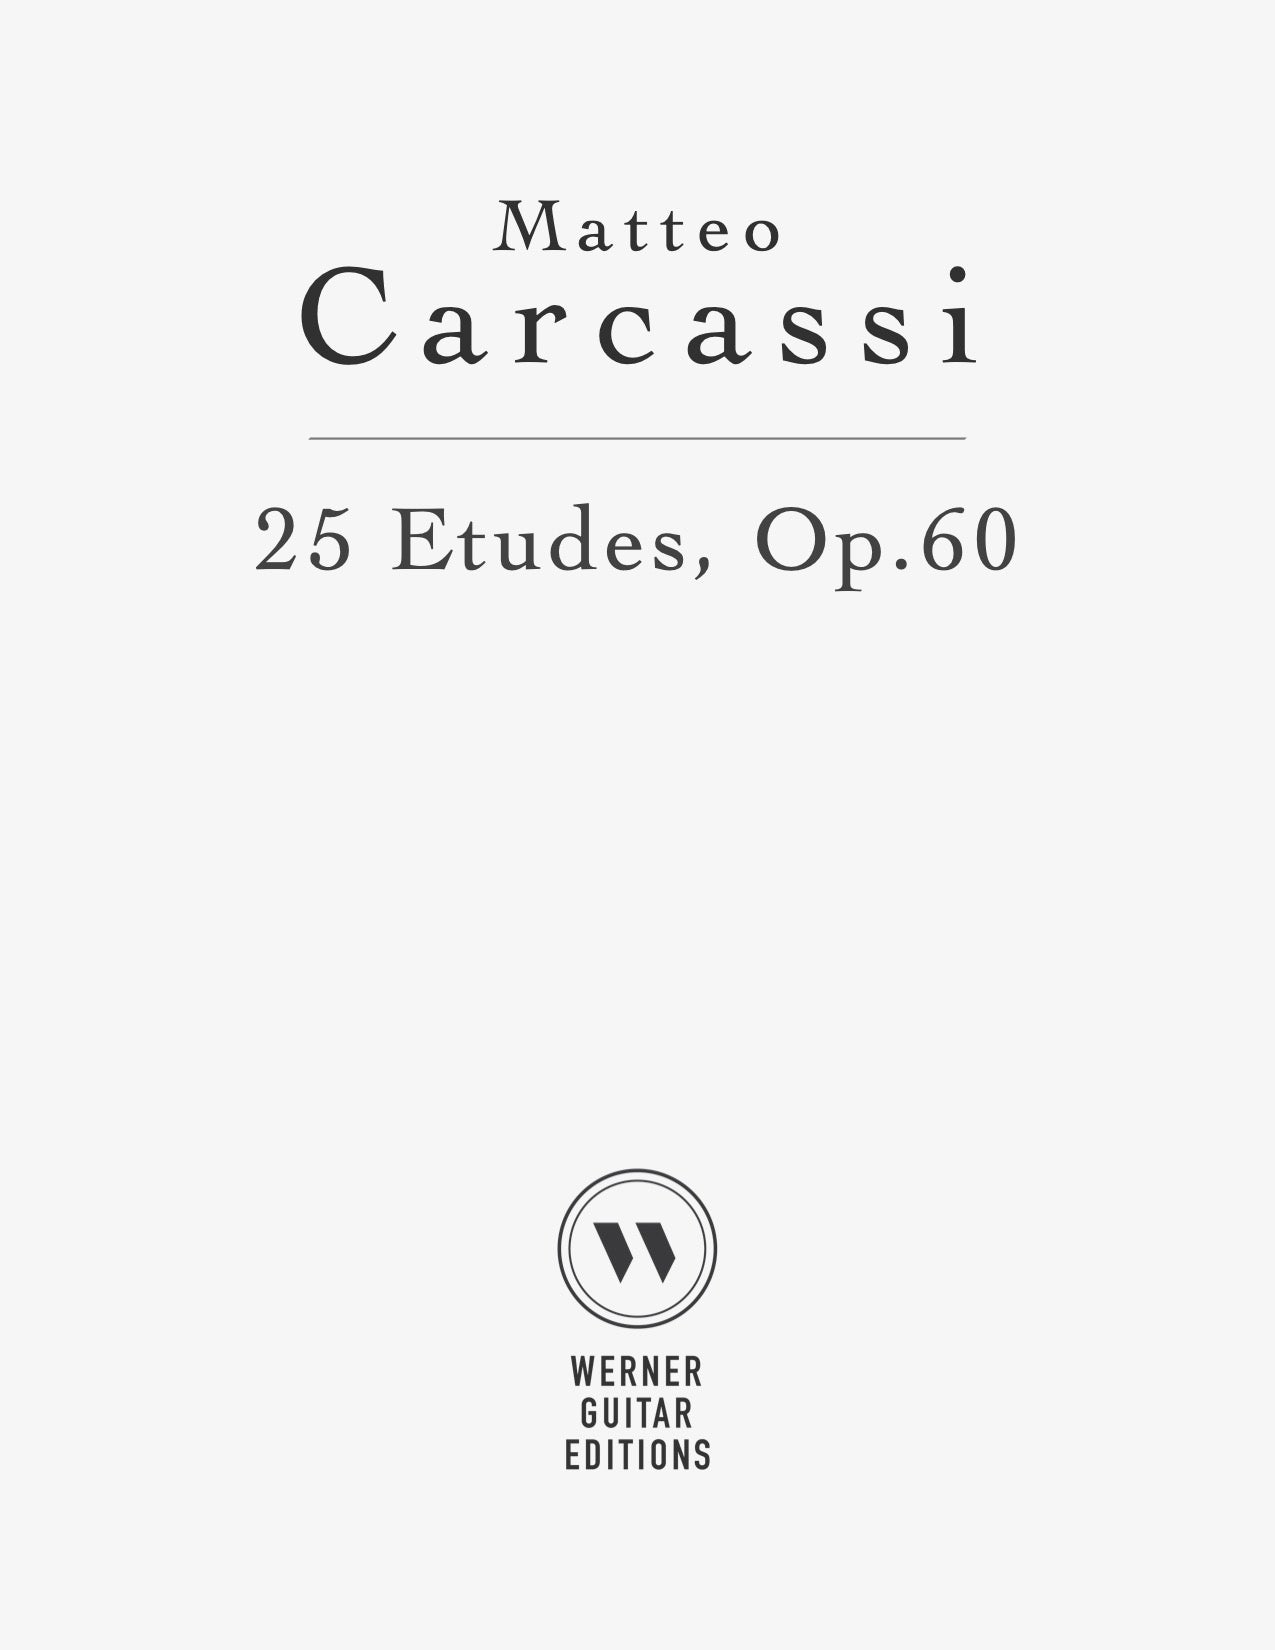 25 Etudes, Op.60 by Carcassi (PDF Sheet Music)